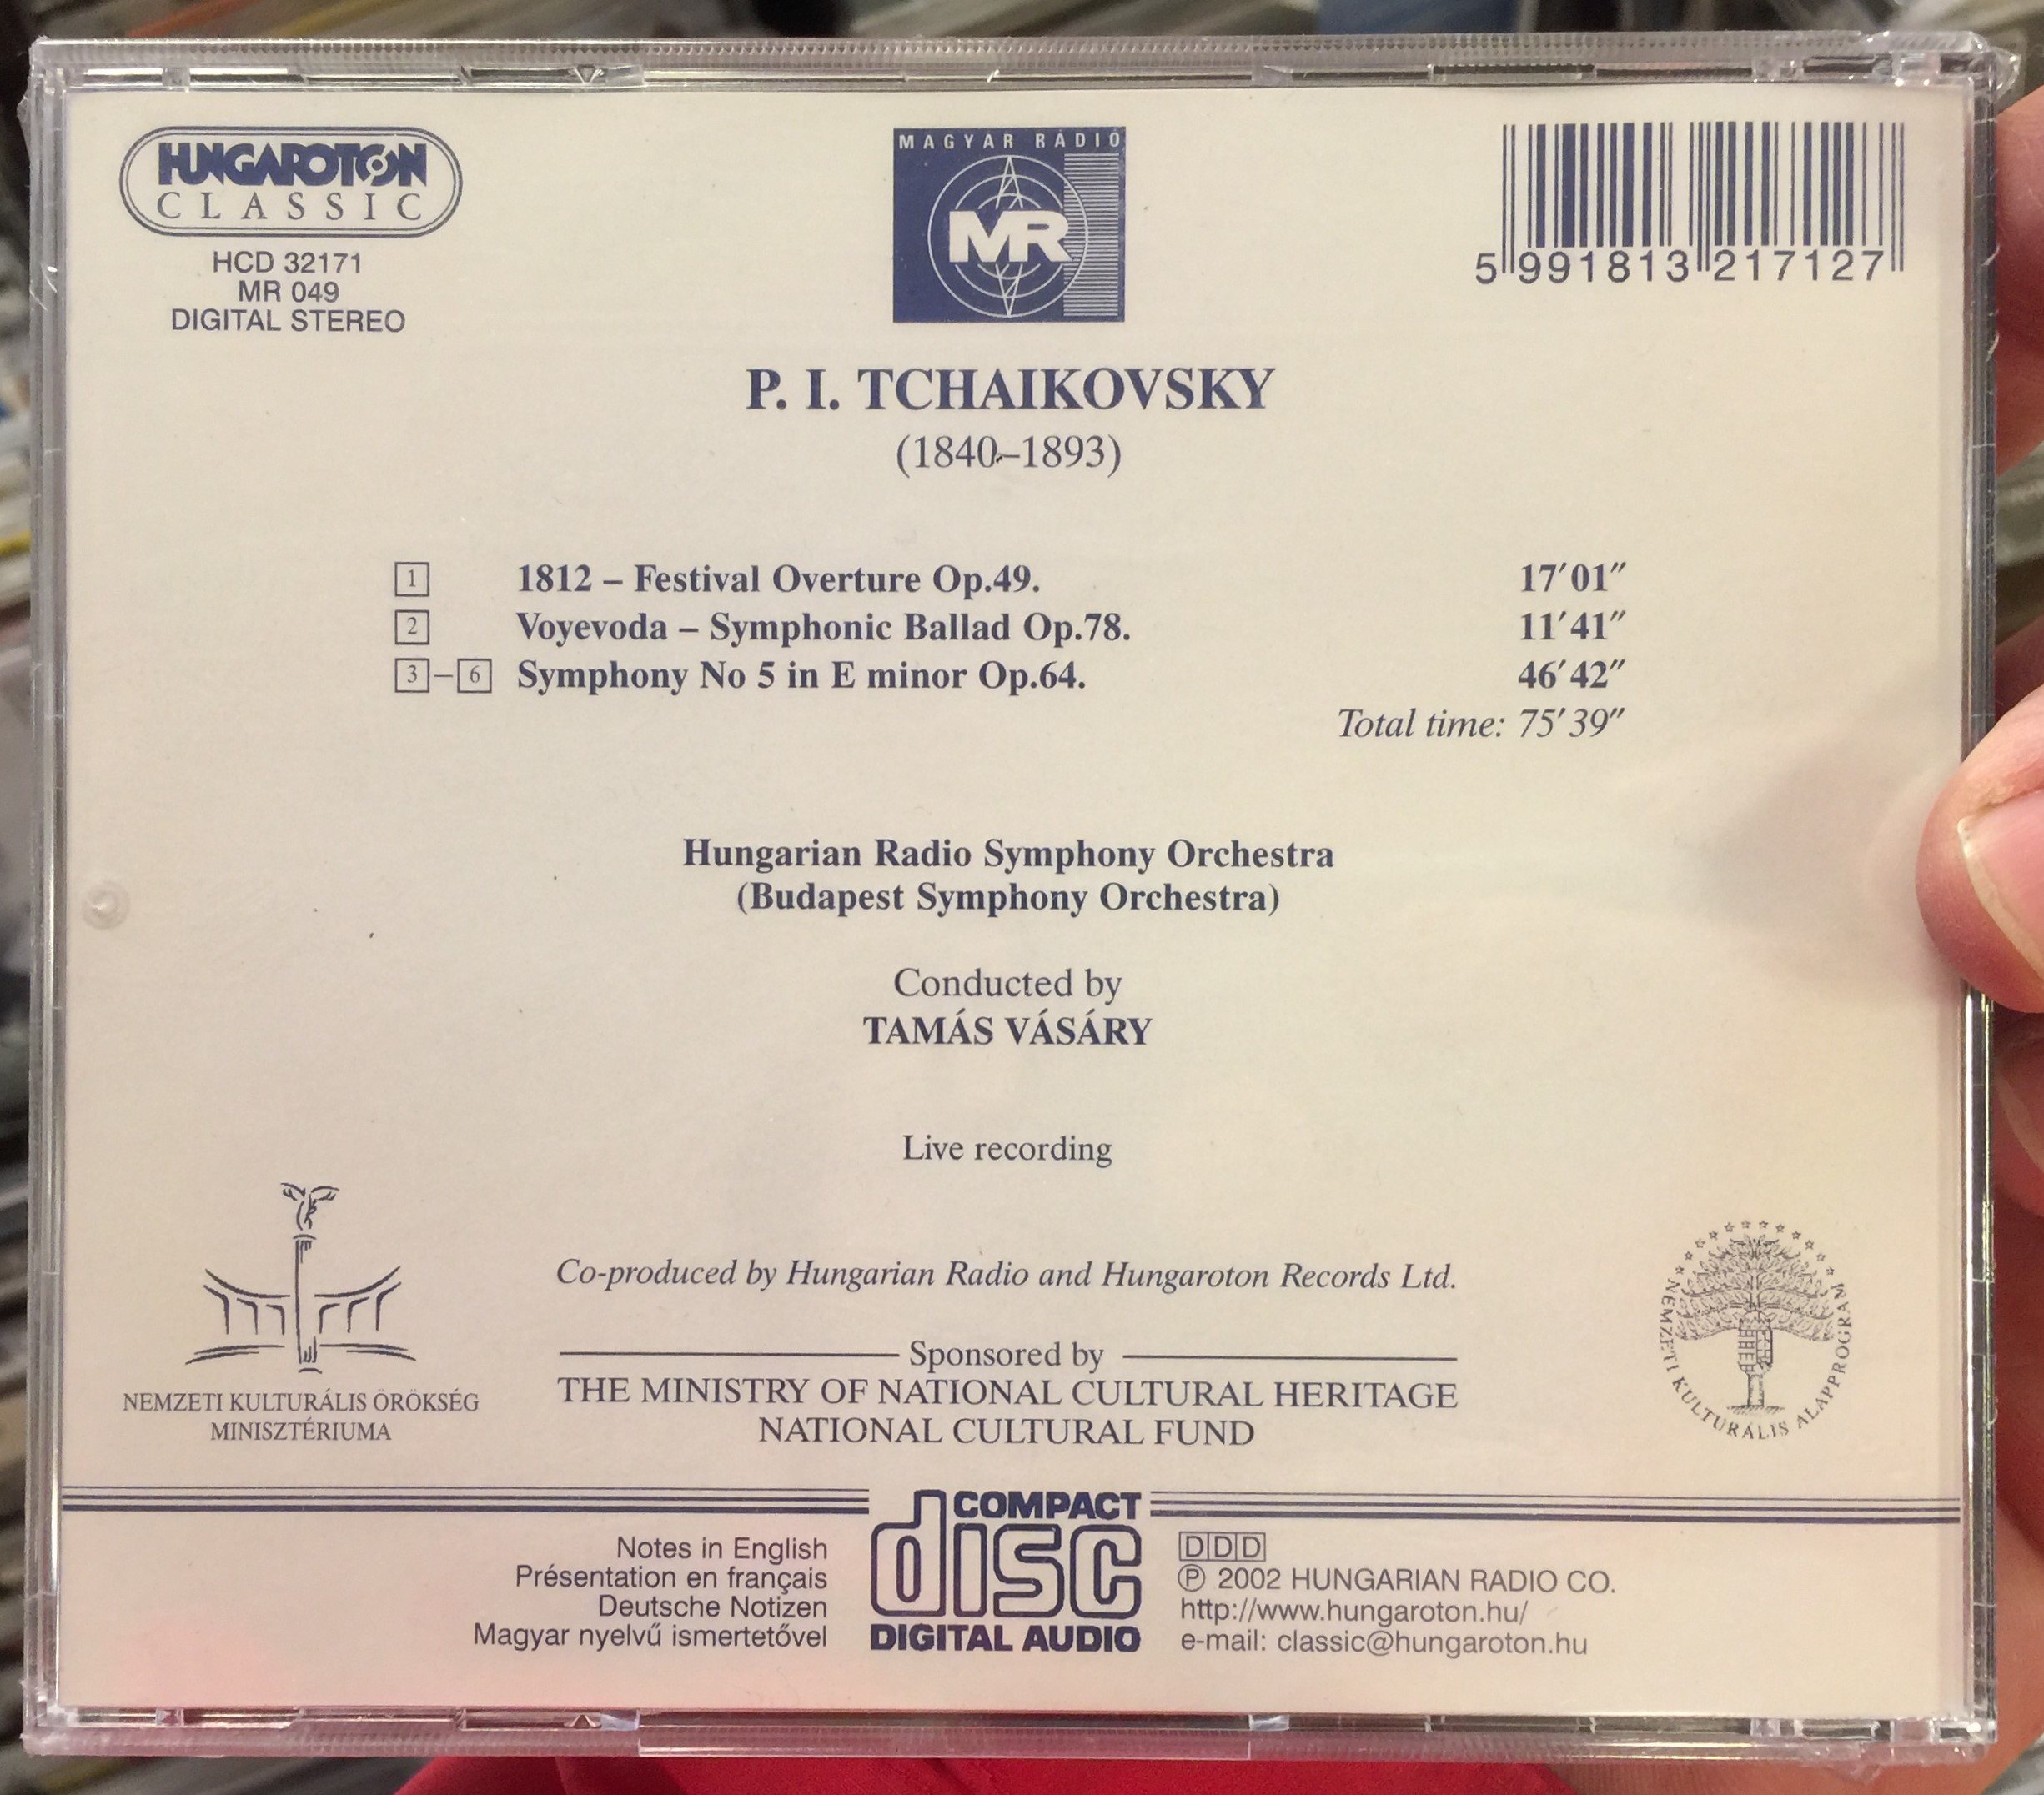 tchaikovsky-1812-ouverture-voyevoda-symphonic-ballad-symphony-no.-5-hungarian-radio-symphony-orchestra-budapest-symphony-orchestra-conducted-by-tamas-vasary-hungaroton-classic-audio.jpg